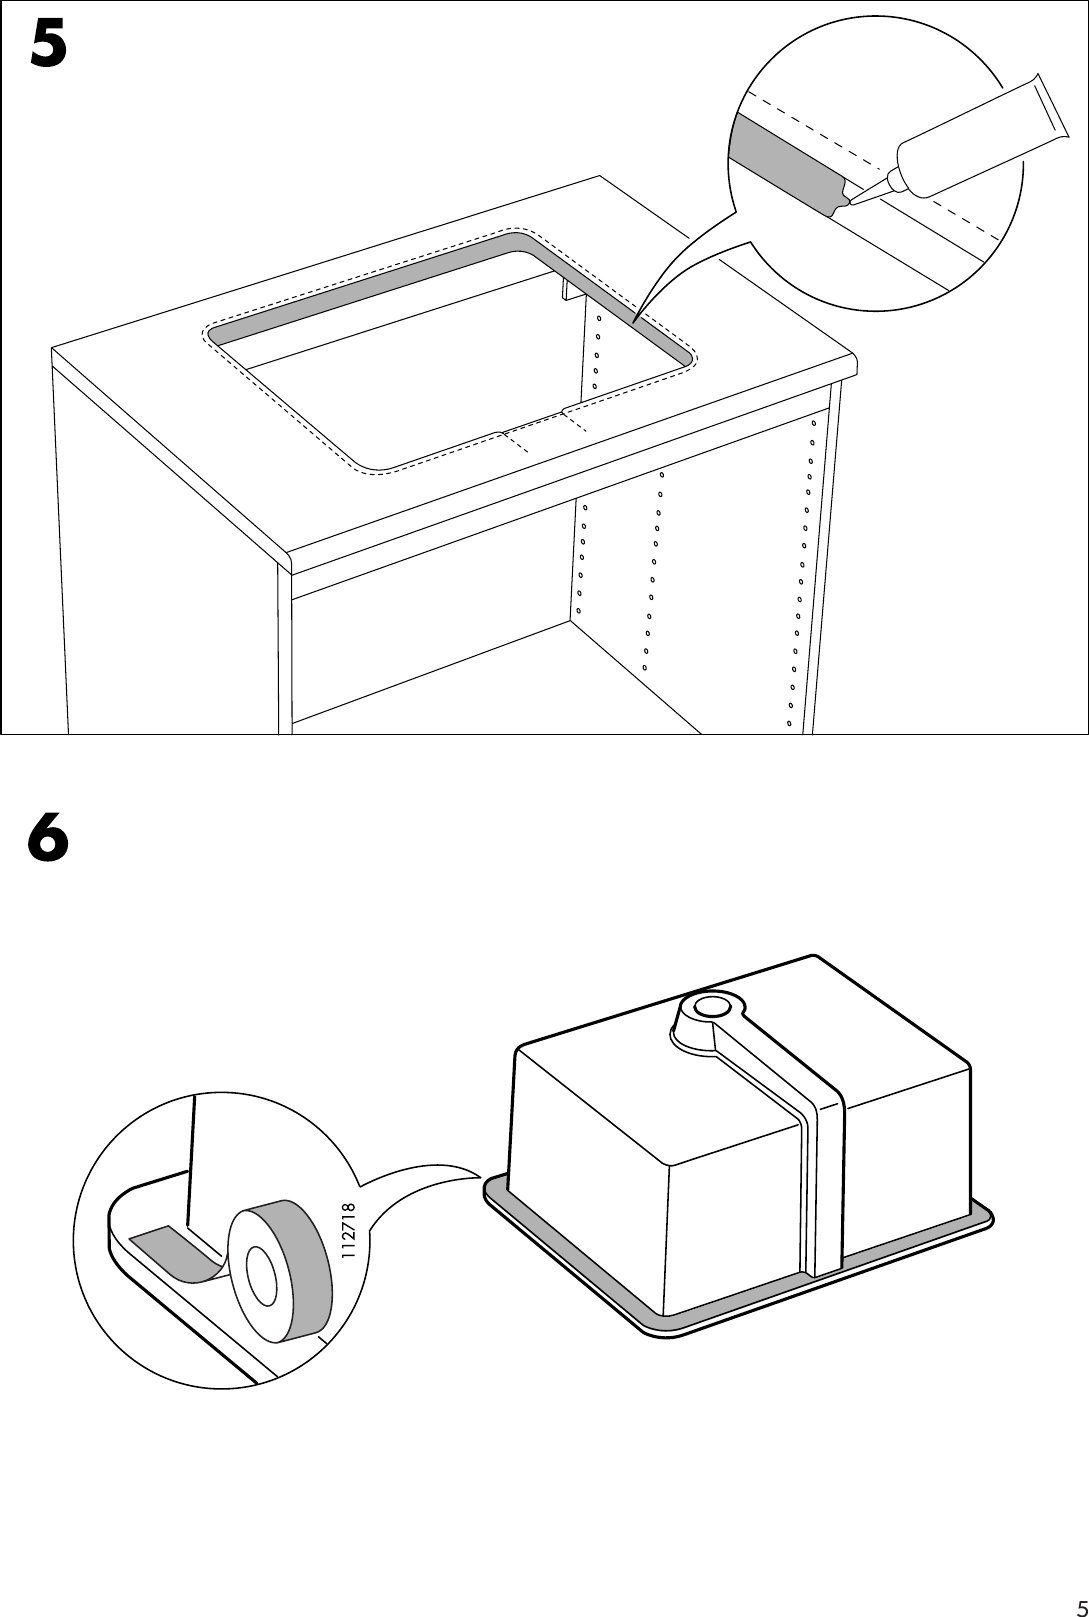 Page 5 of 8 - Ikea Ikea-Aspskar-Sink-Assembly-Instruction